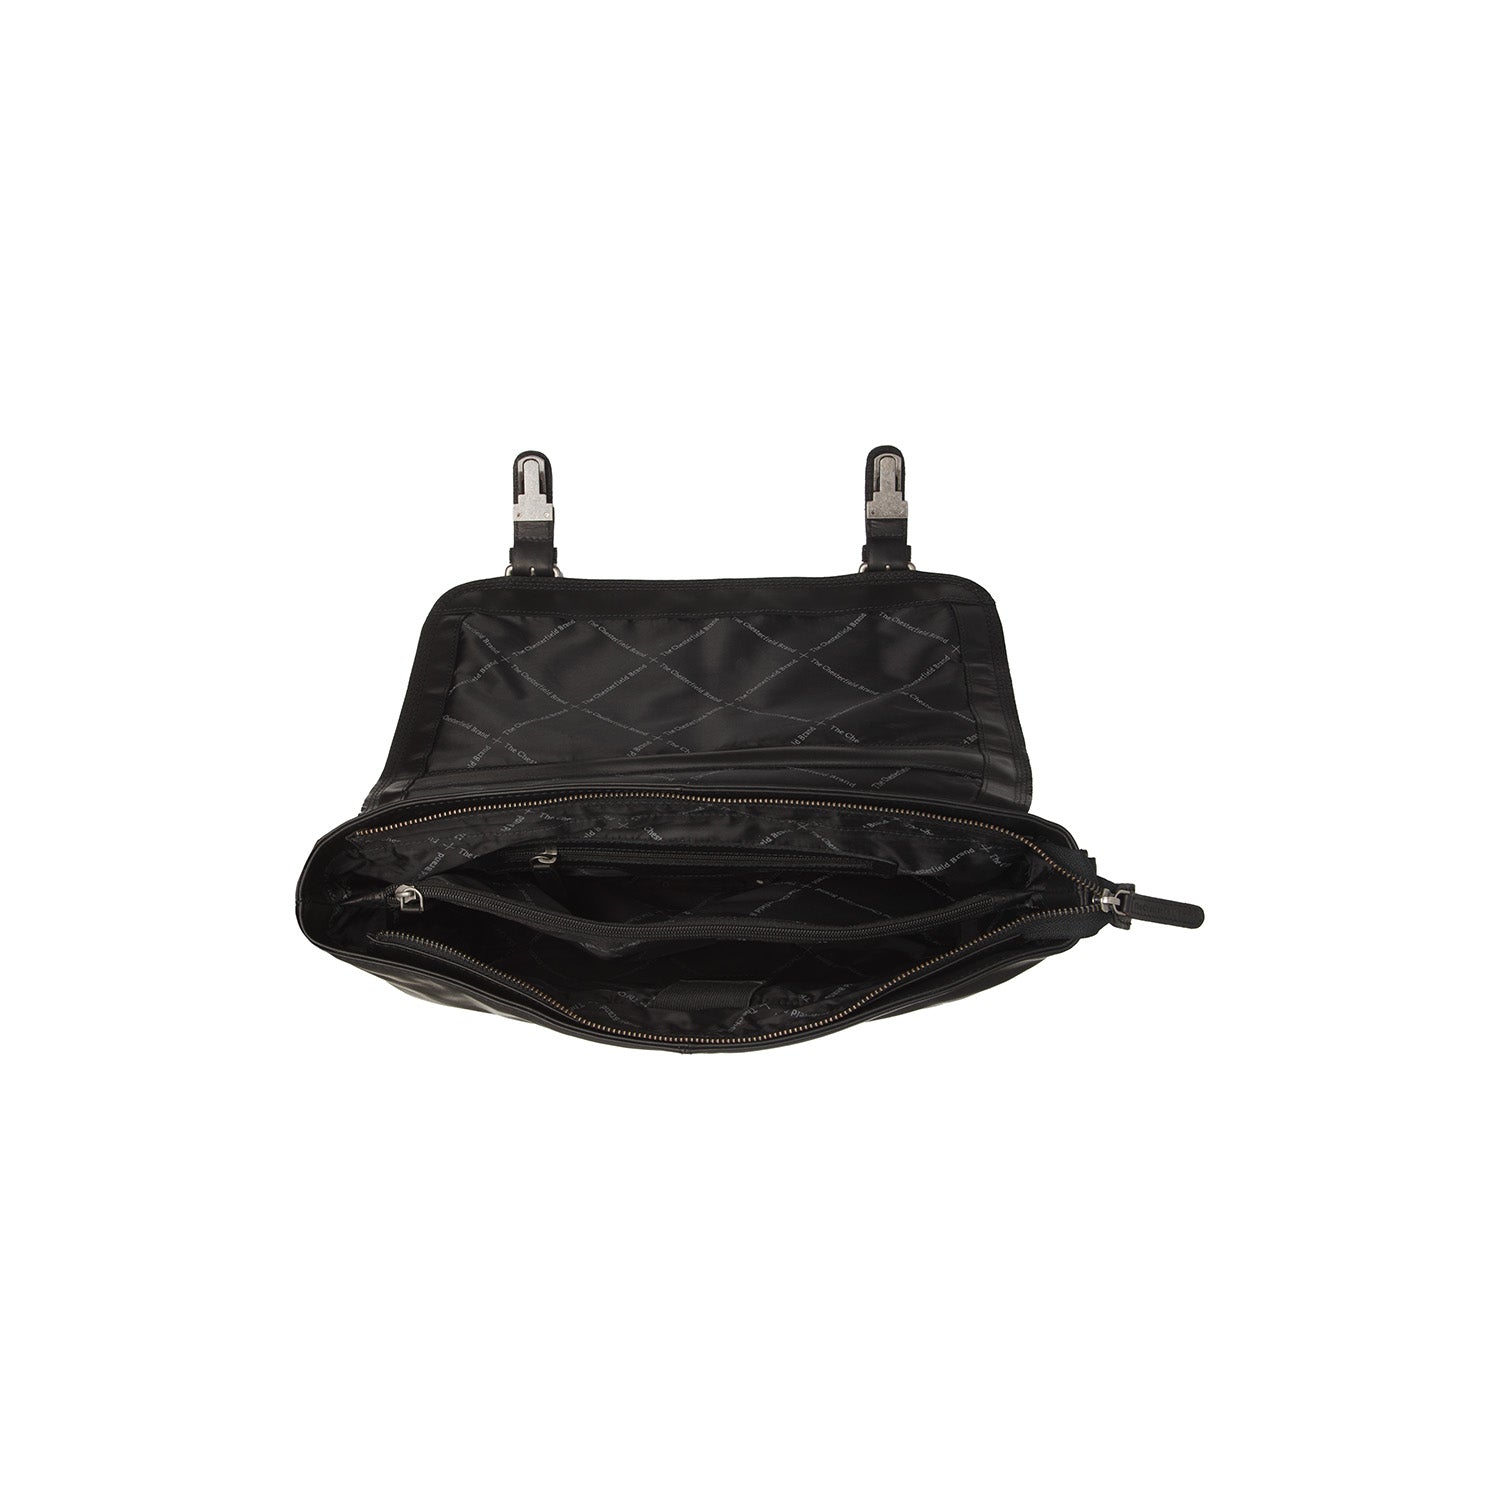 Leather Laptop Bag - The Chesterfield Brand Veneto Black